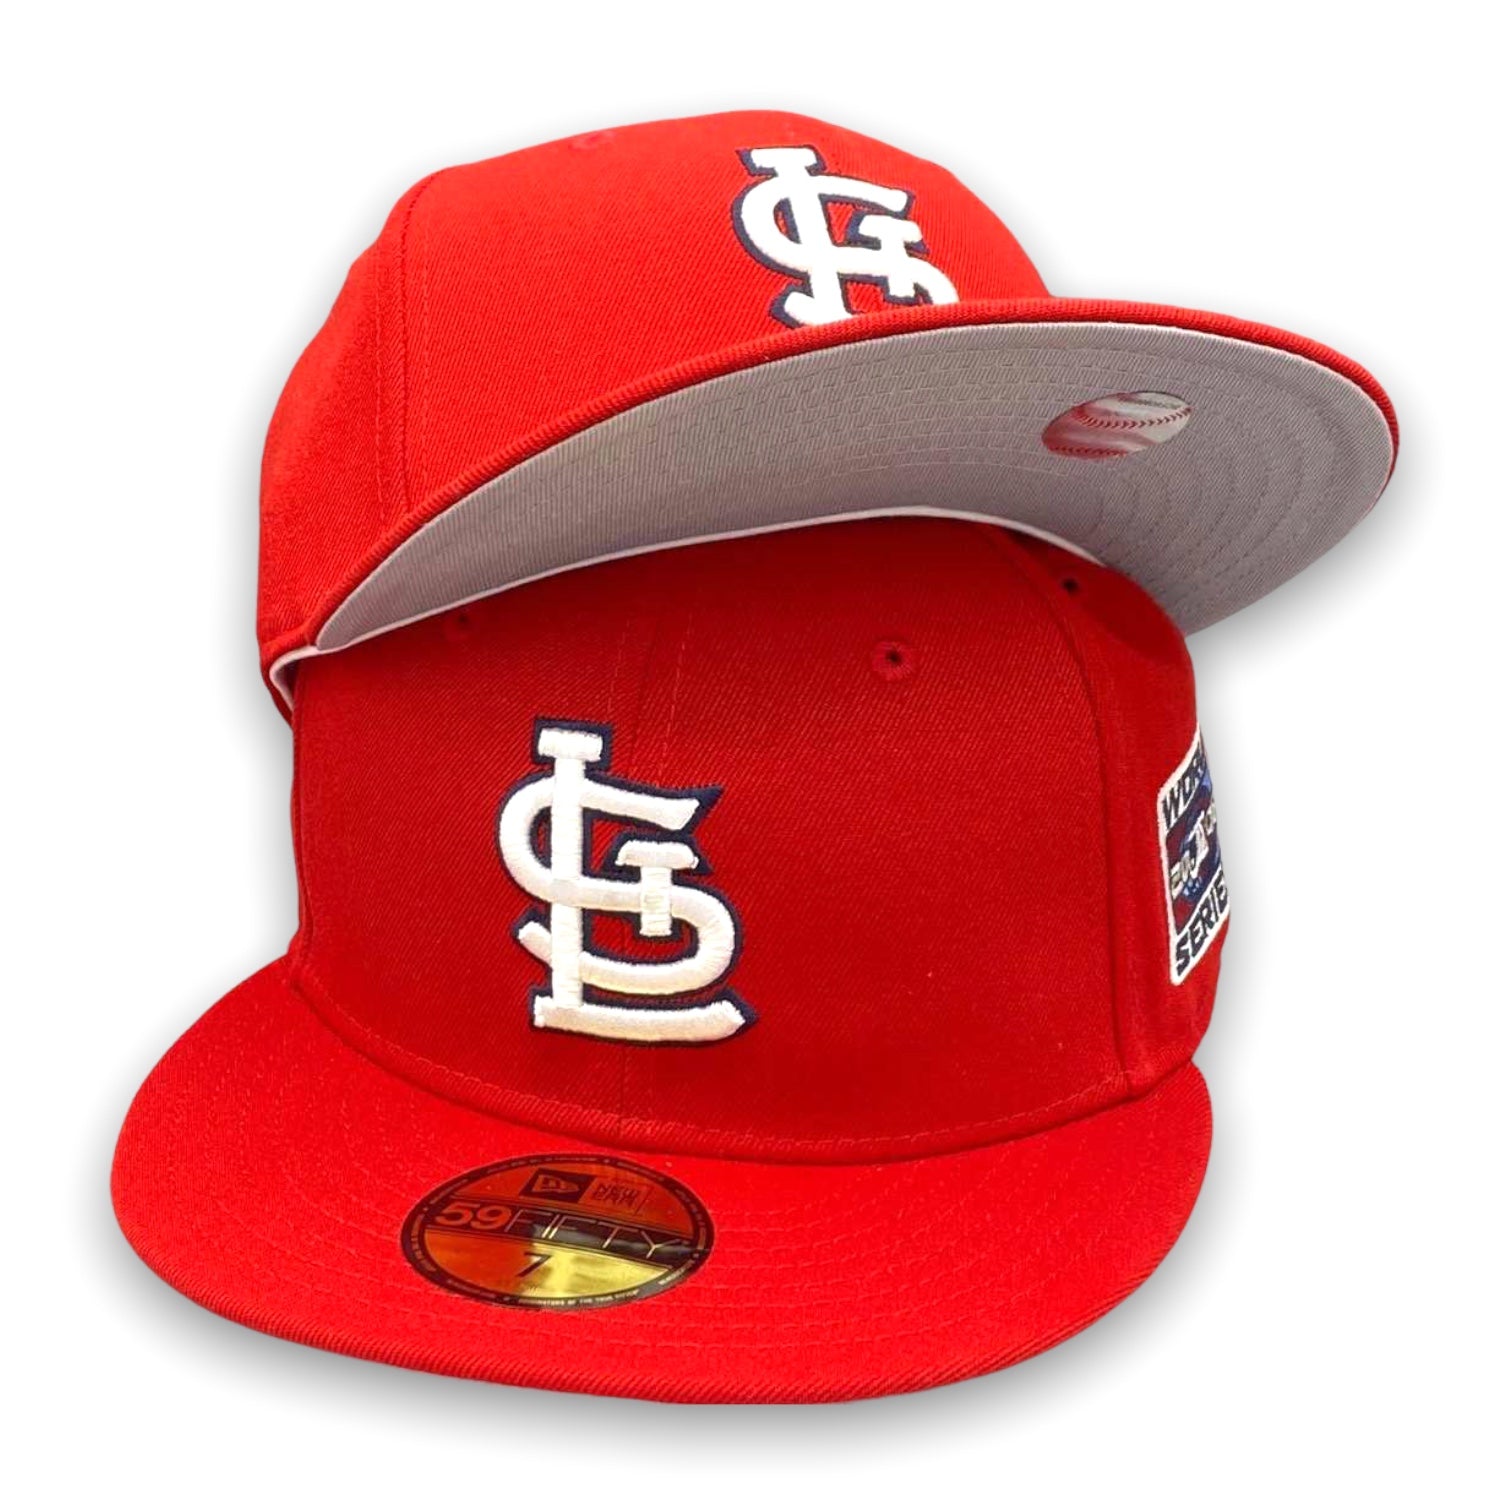 St. Louis Cardinals New Era 1967 World Series 59FIFTY Fitted Hat - Light  Blue